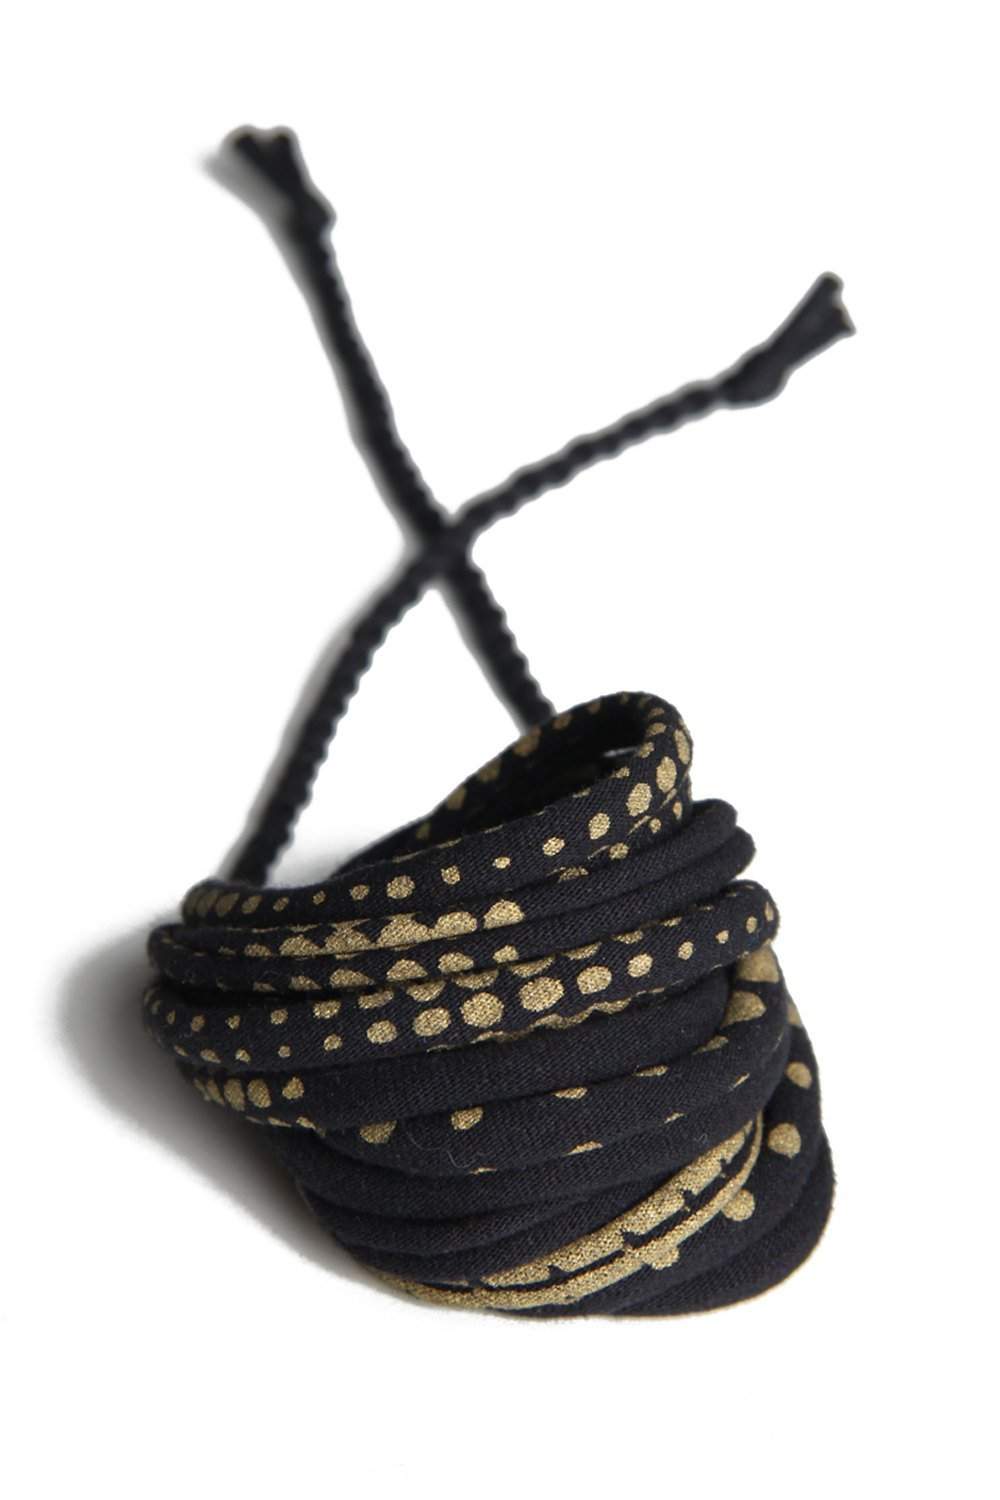 Wrap Bracelet / Black Gold-bracelets-Necklush